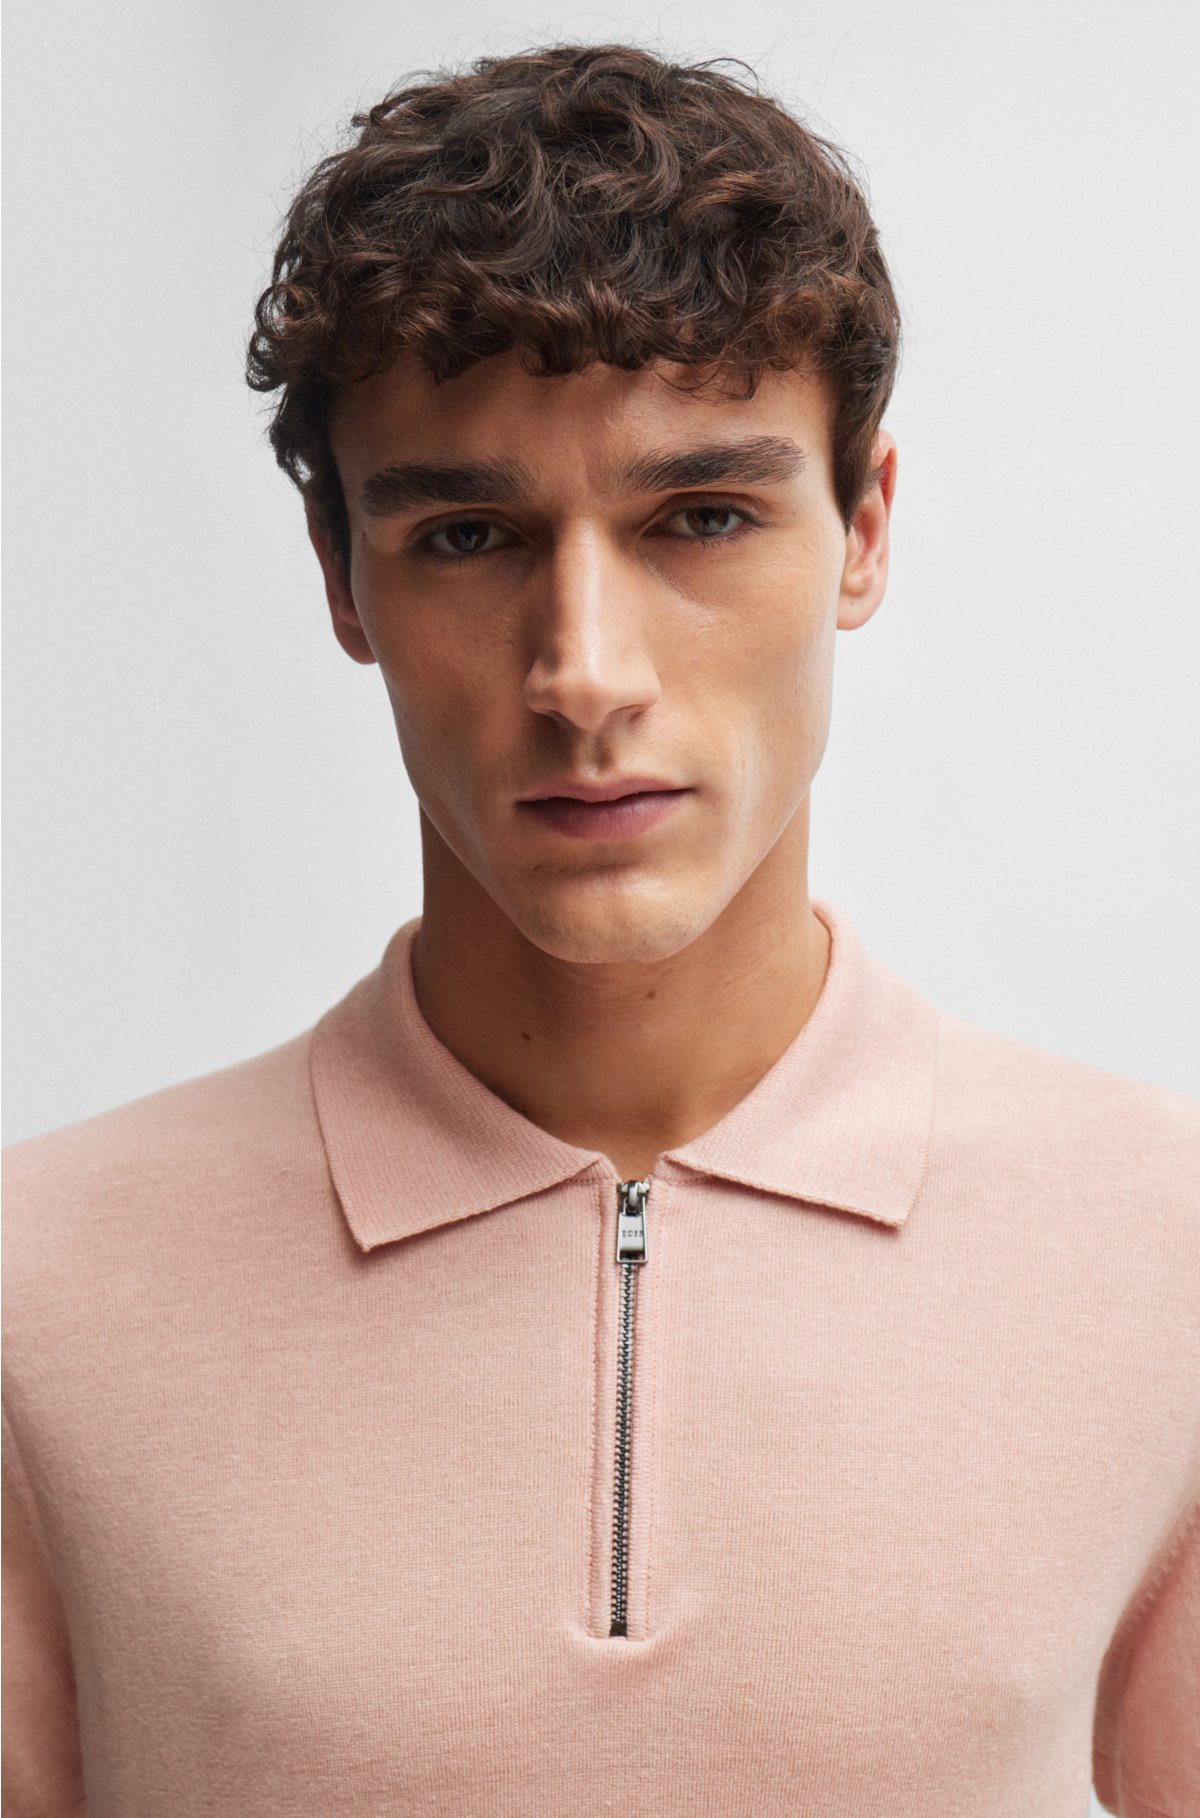 Zip-neck polo sweater in a linen blend, light pink